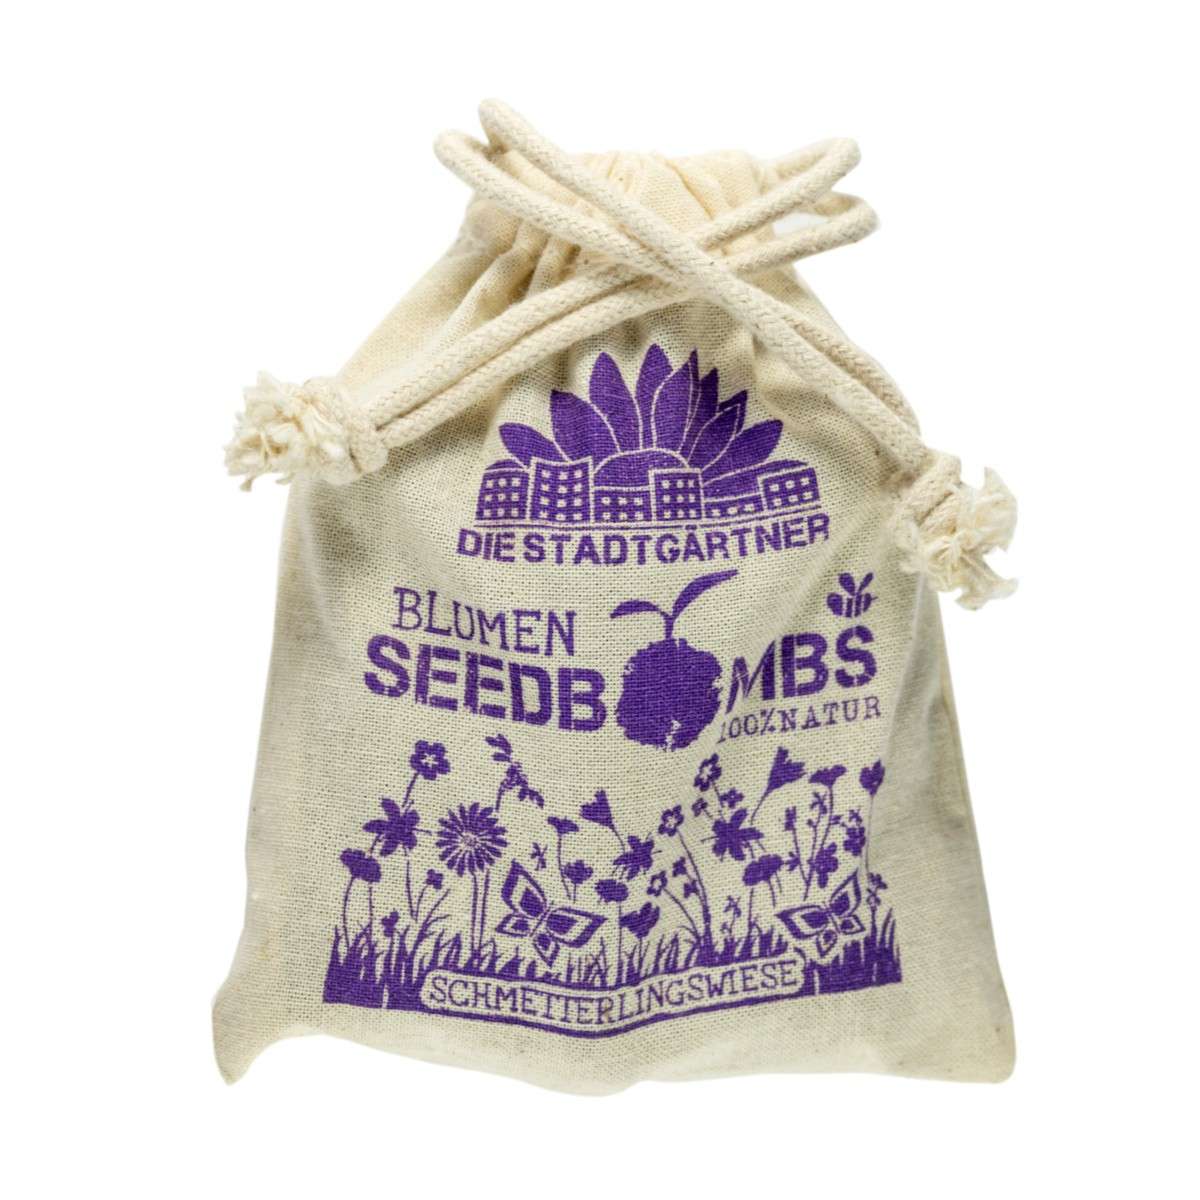 Die Stadtgärtner - Seedbombs linen bag set of 10 - Butterfly Delight